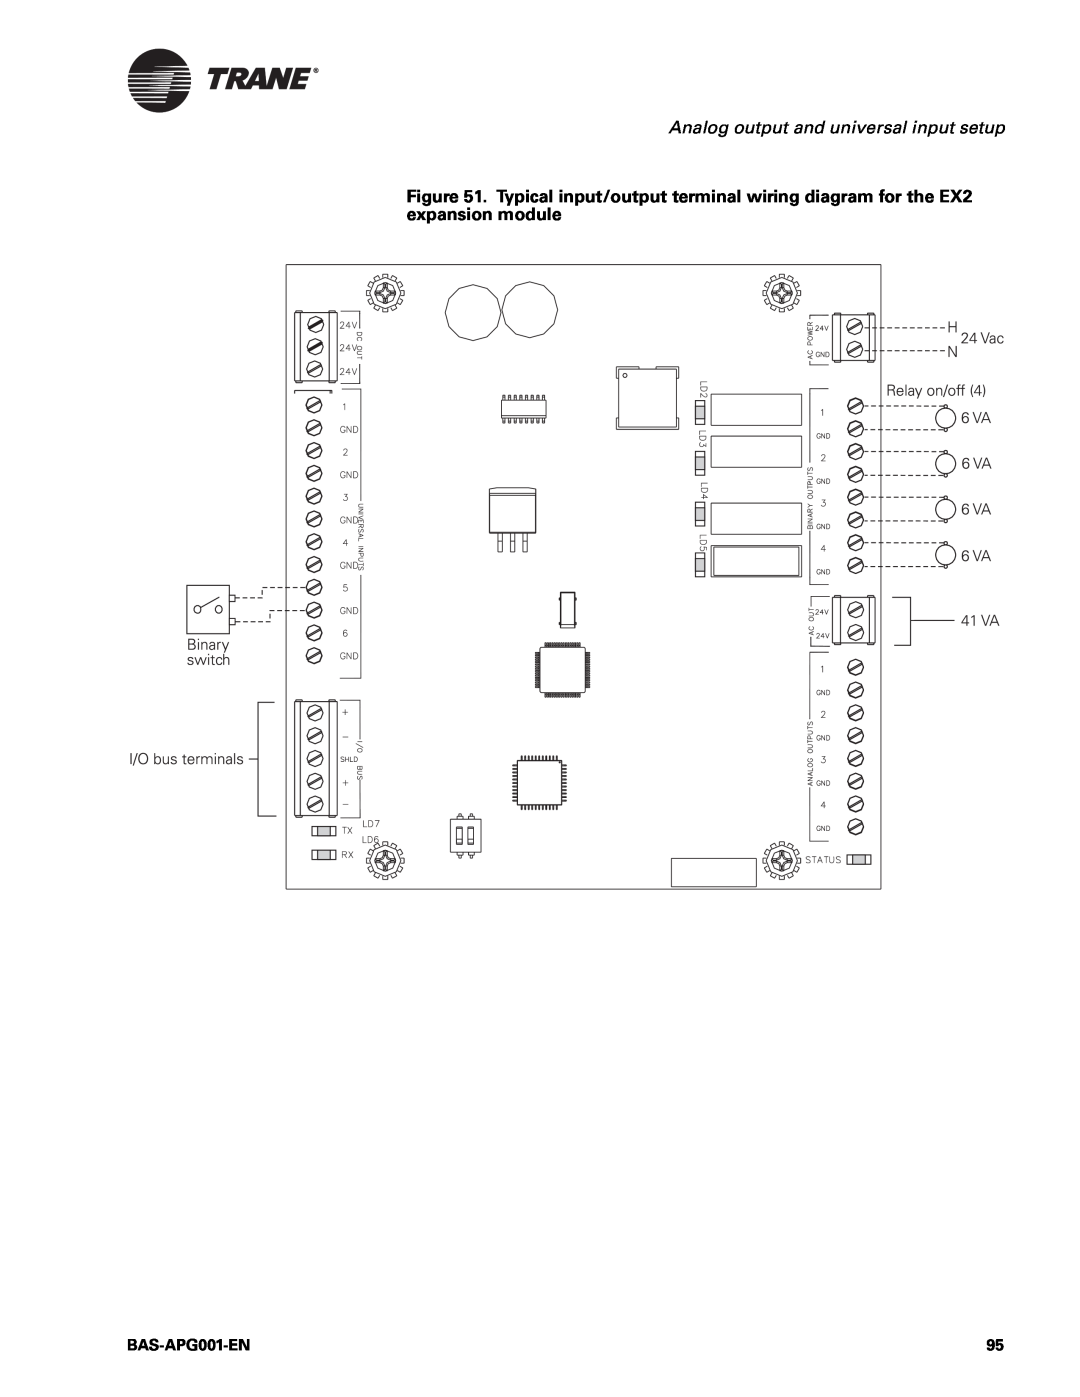 Trane Engineered Smoke Control System for Tracer Summit manual Analog output and universal input setup, BAS-APG001-EN 